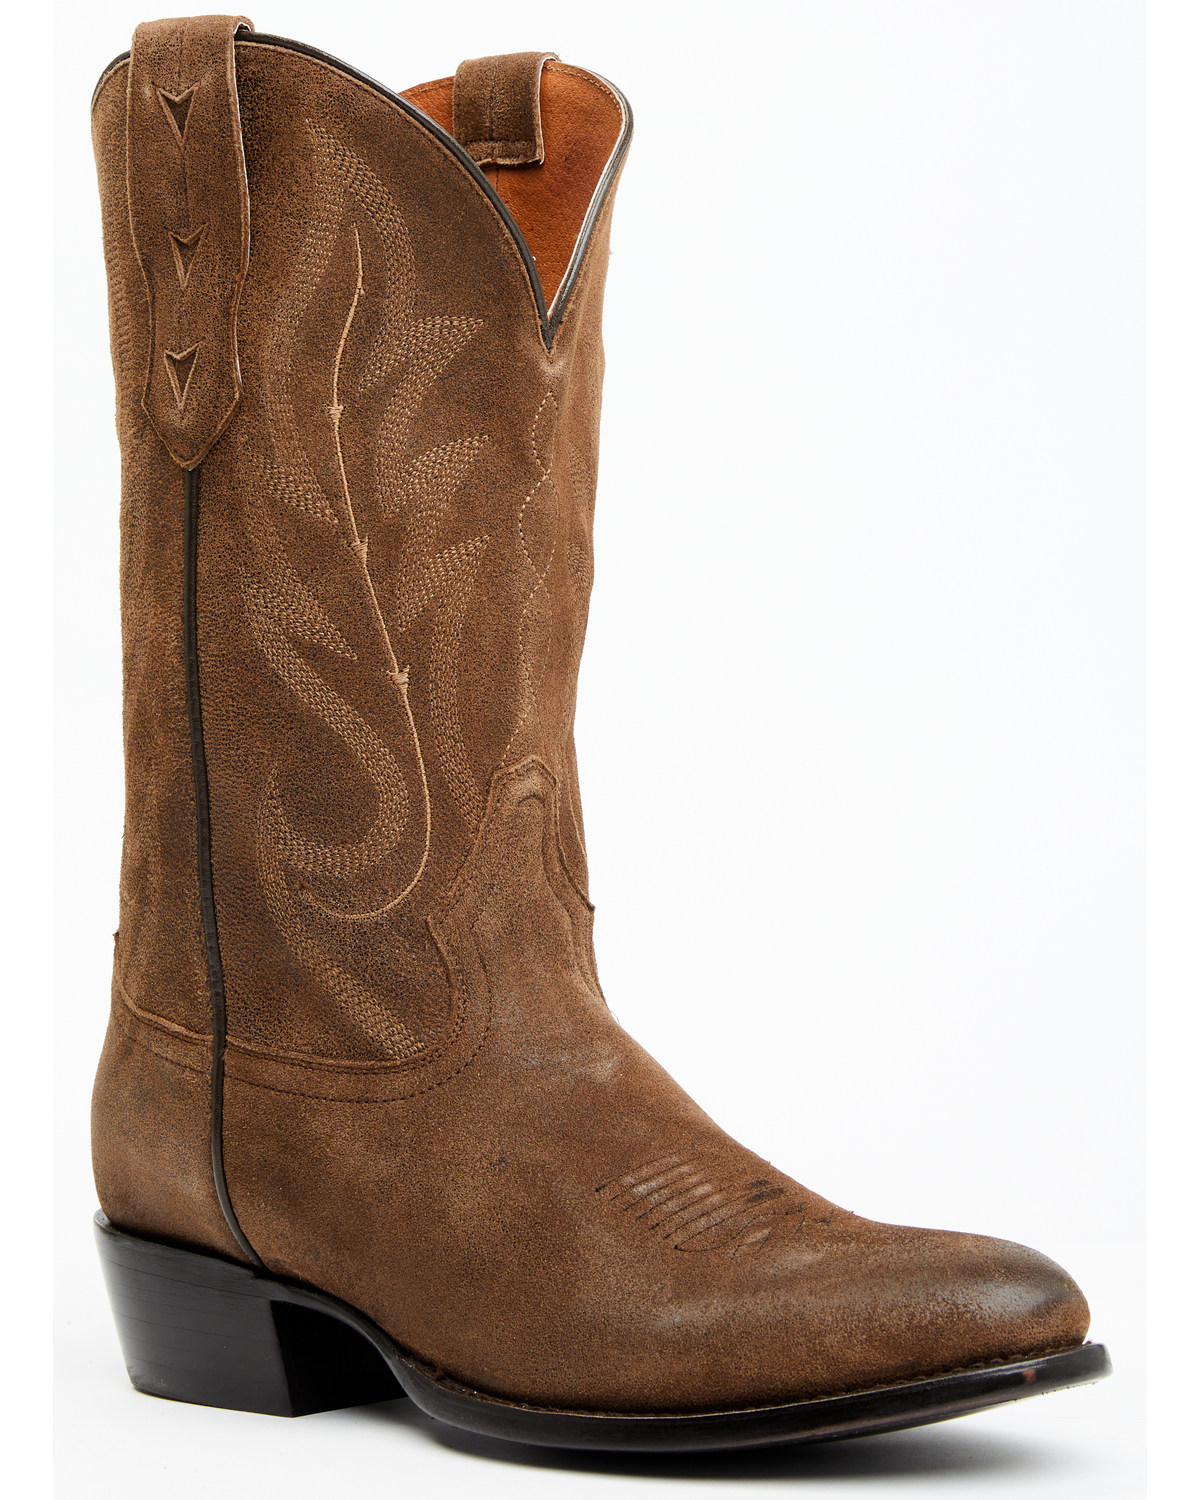 Cody James Men's Brady Roughout Western Boots - Medium Toe